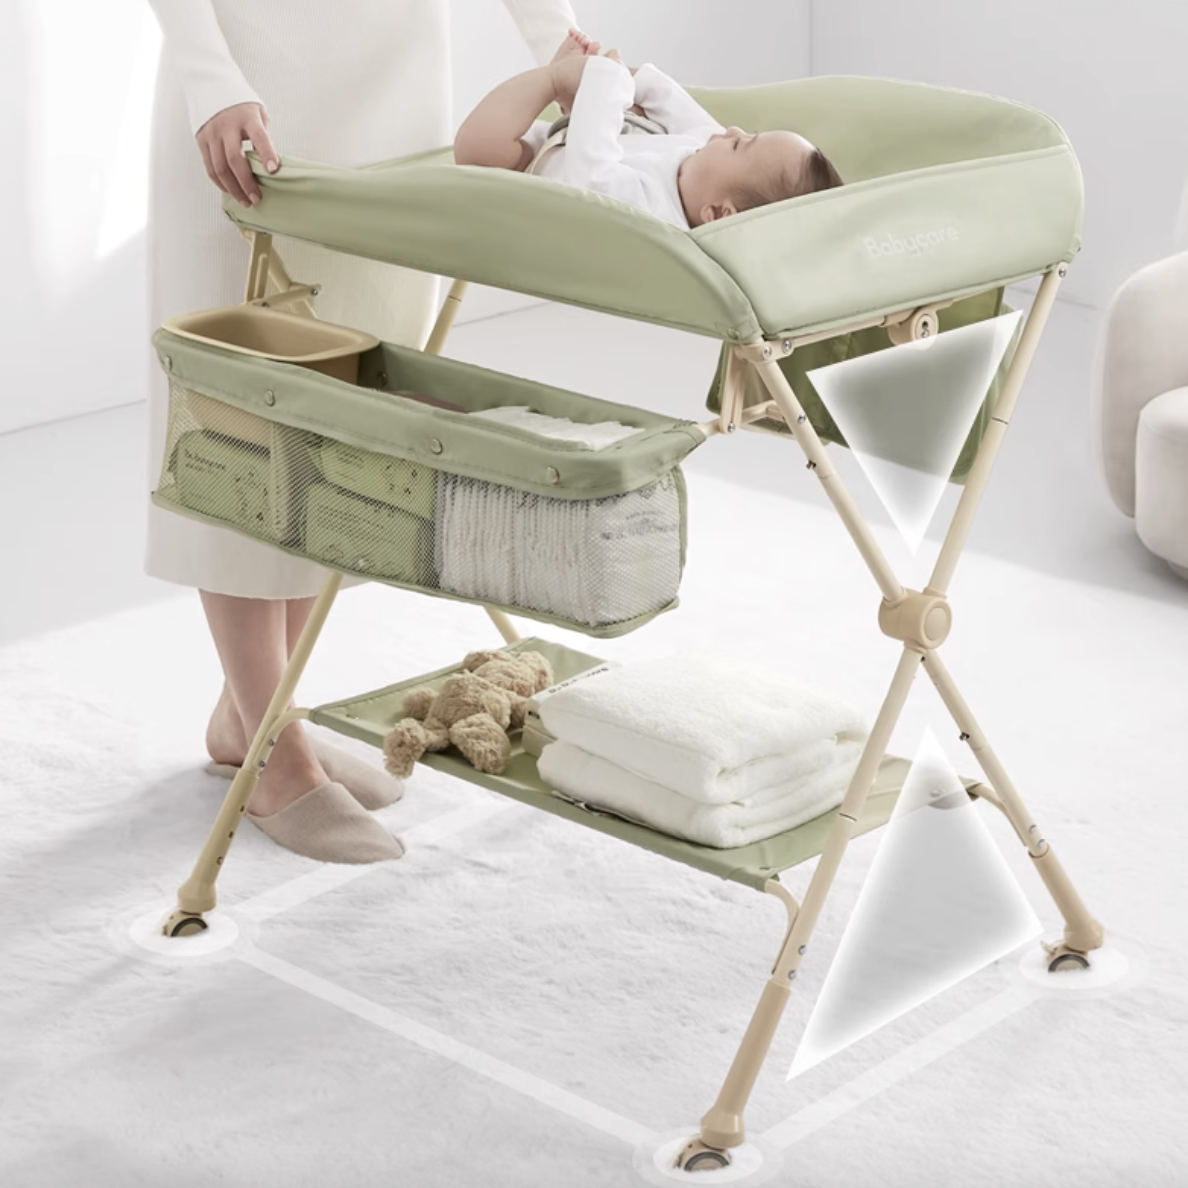 babycare尿布台婴儿护理台多功能换尿布抚触洗澡便携可折叠婴儿床 329元